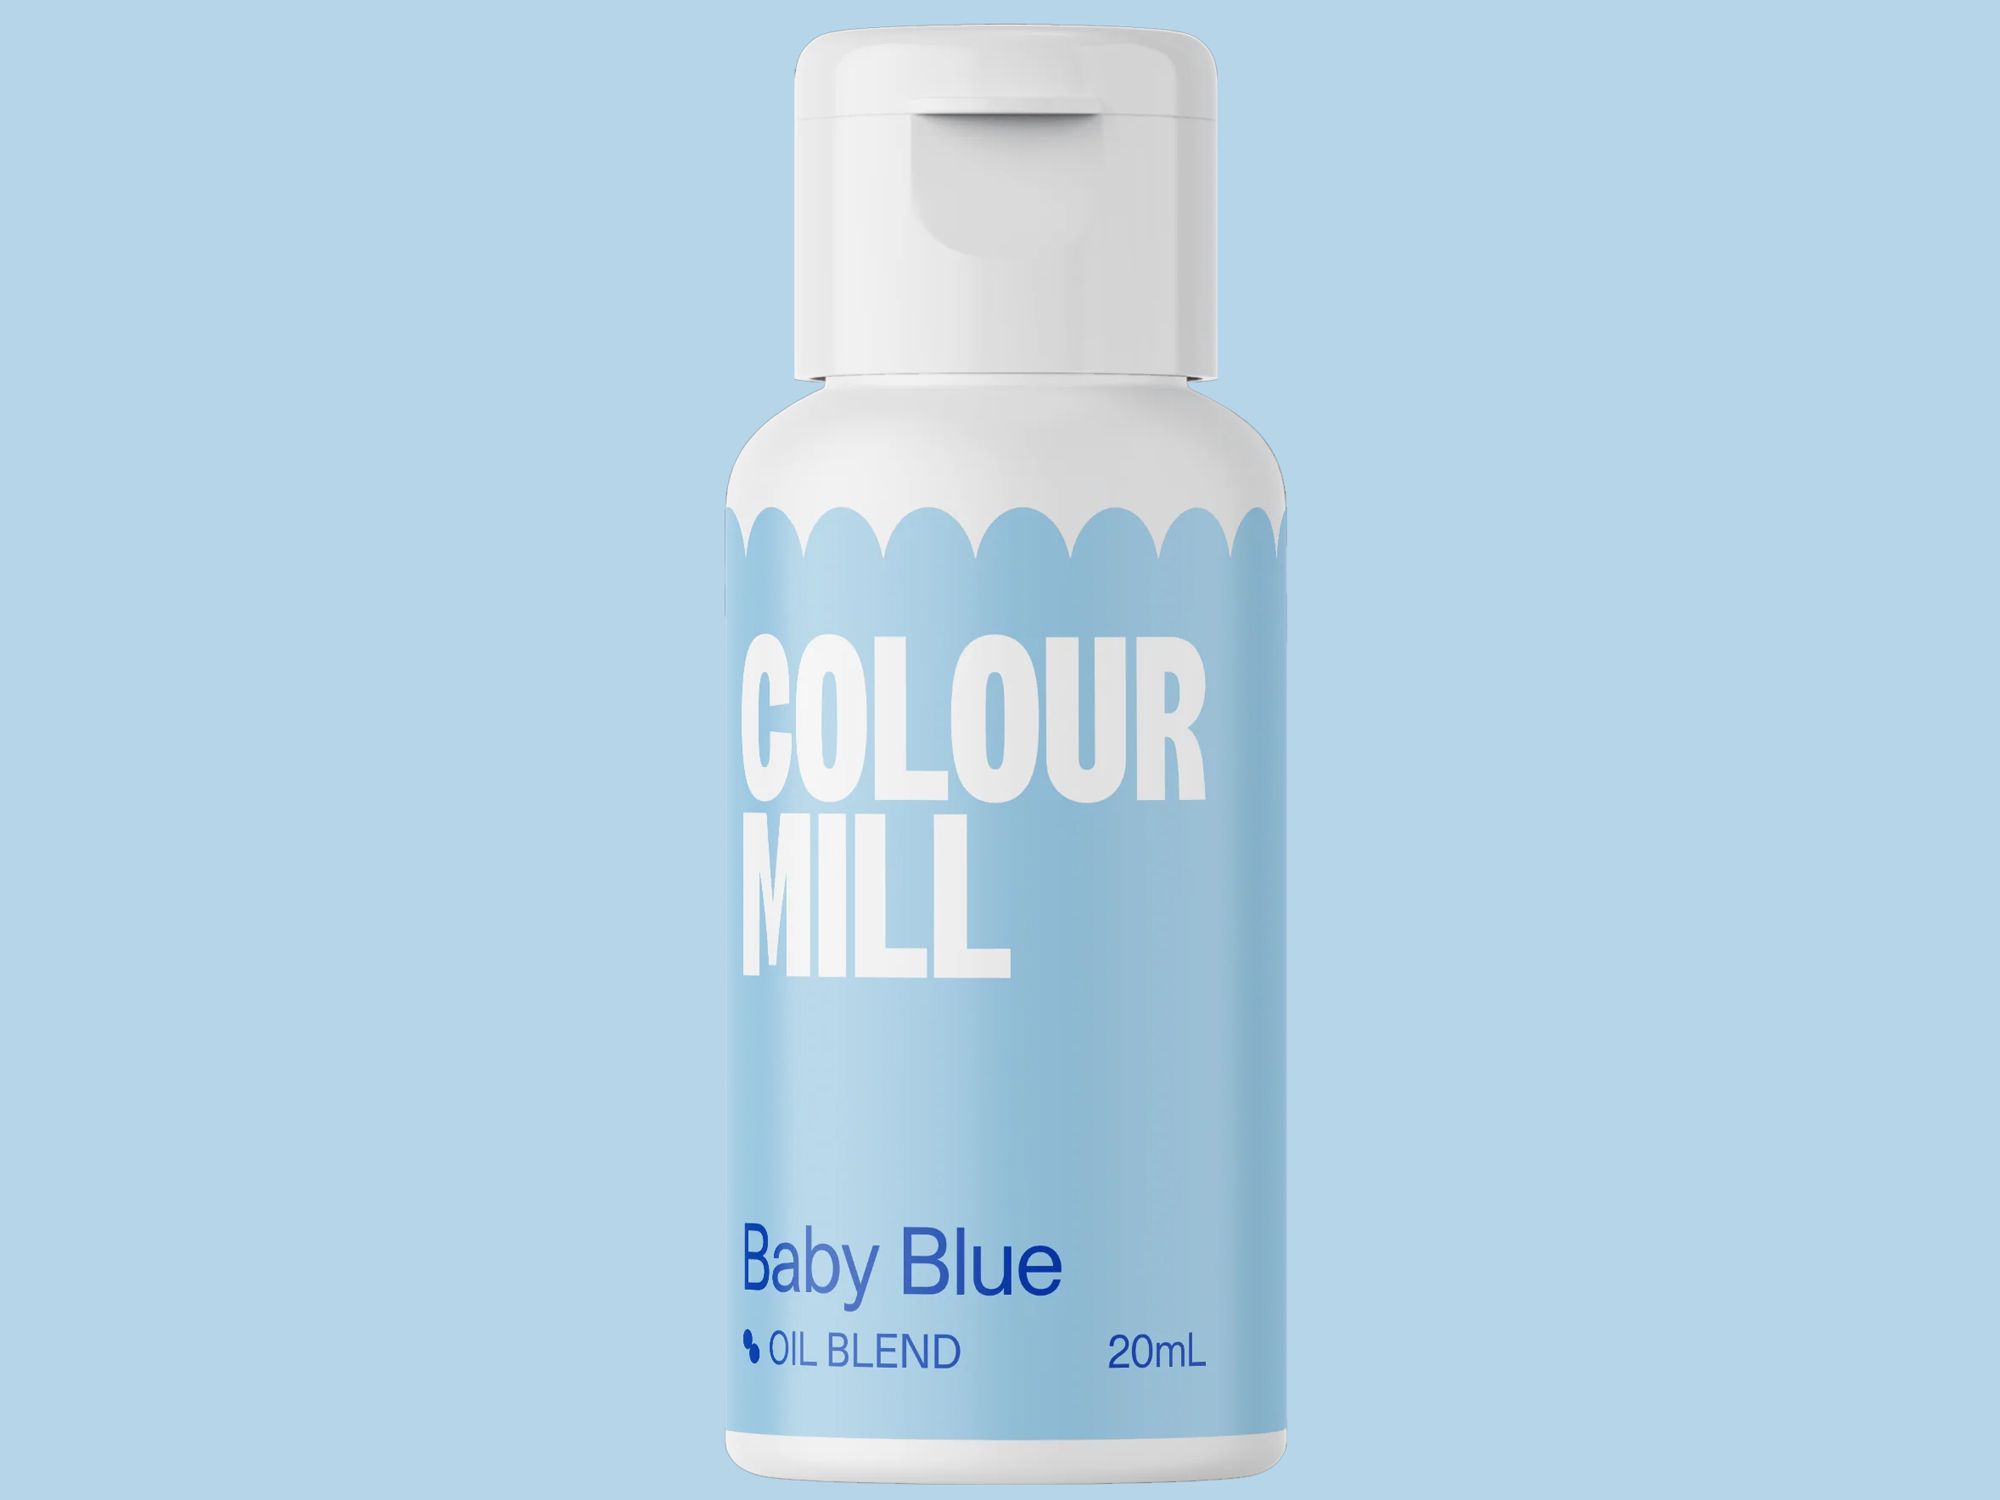 Colour Mill Baby Blue (Oil Blend) 20ml